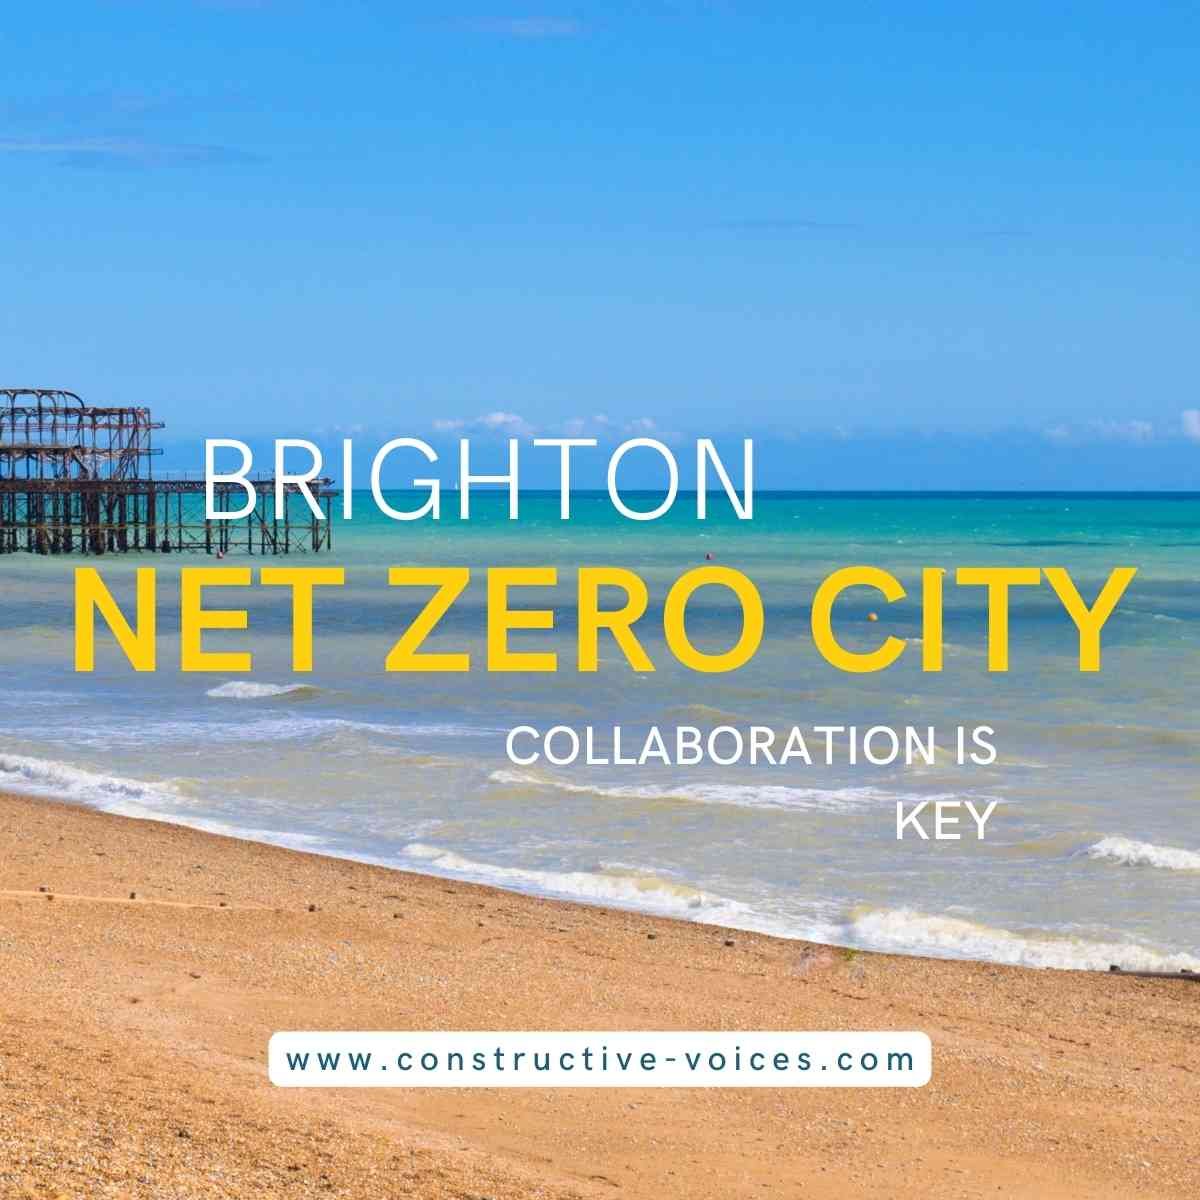 Brighton Net Zero City collaboration